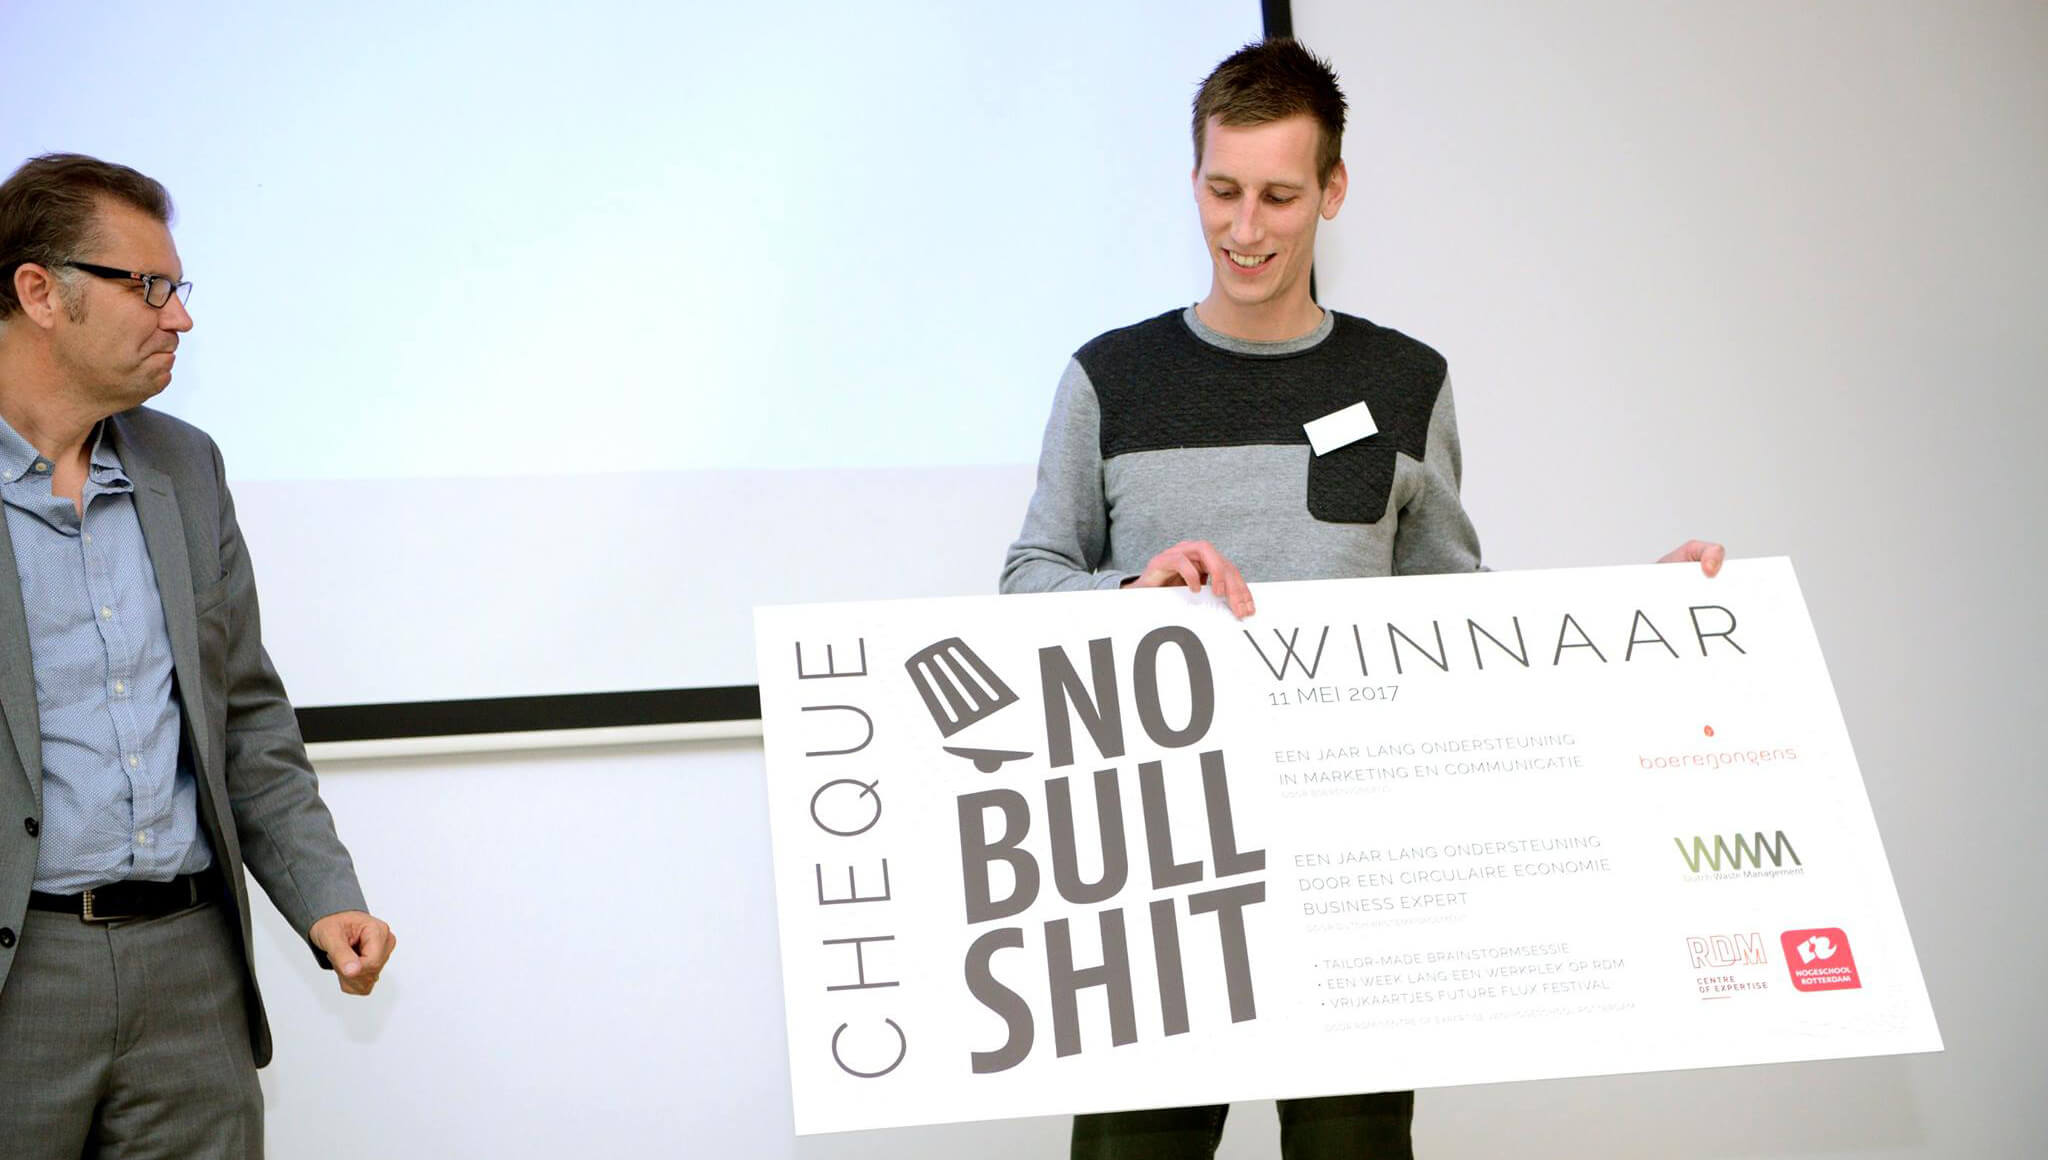 rotterzwam wint no bull shit award [2017]